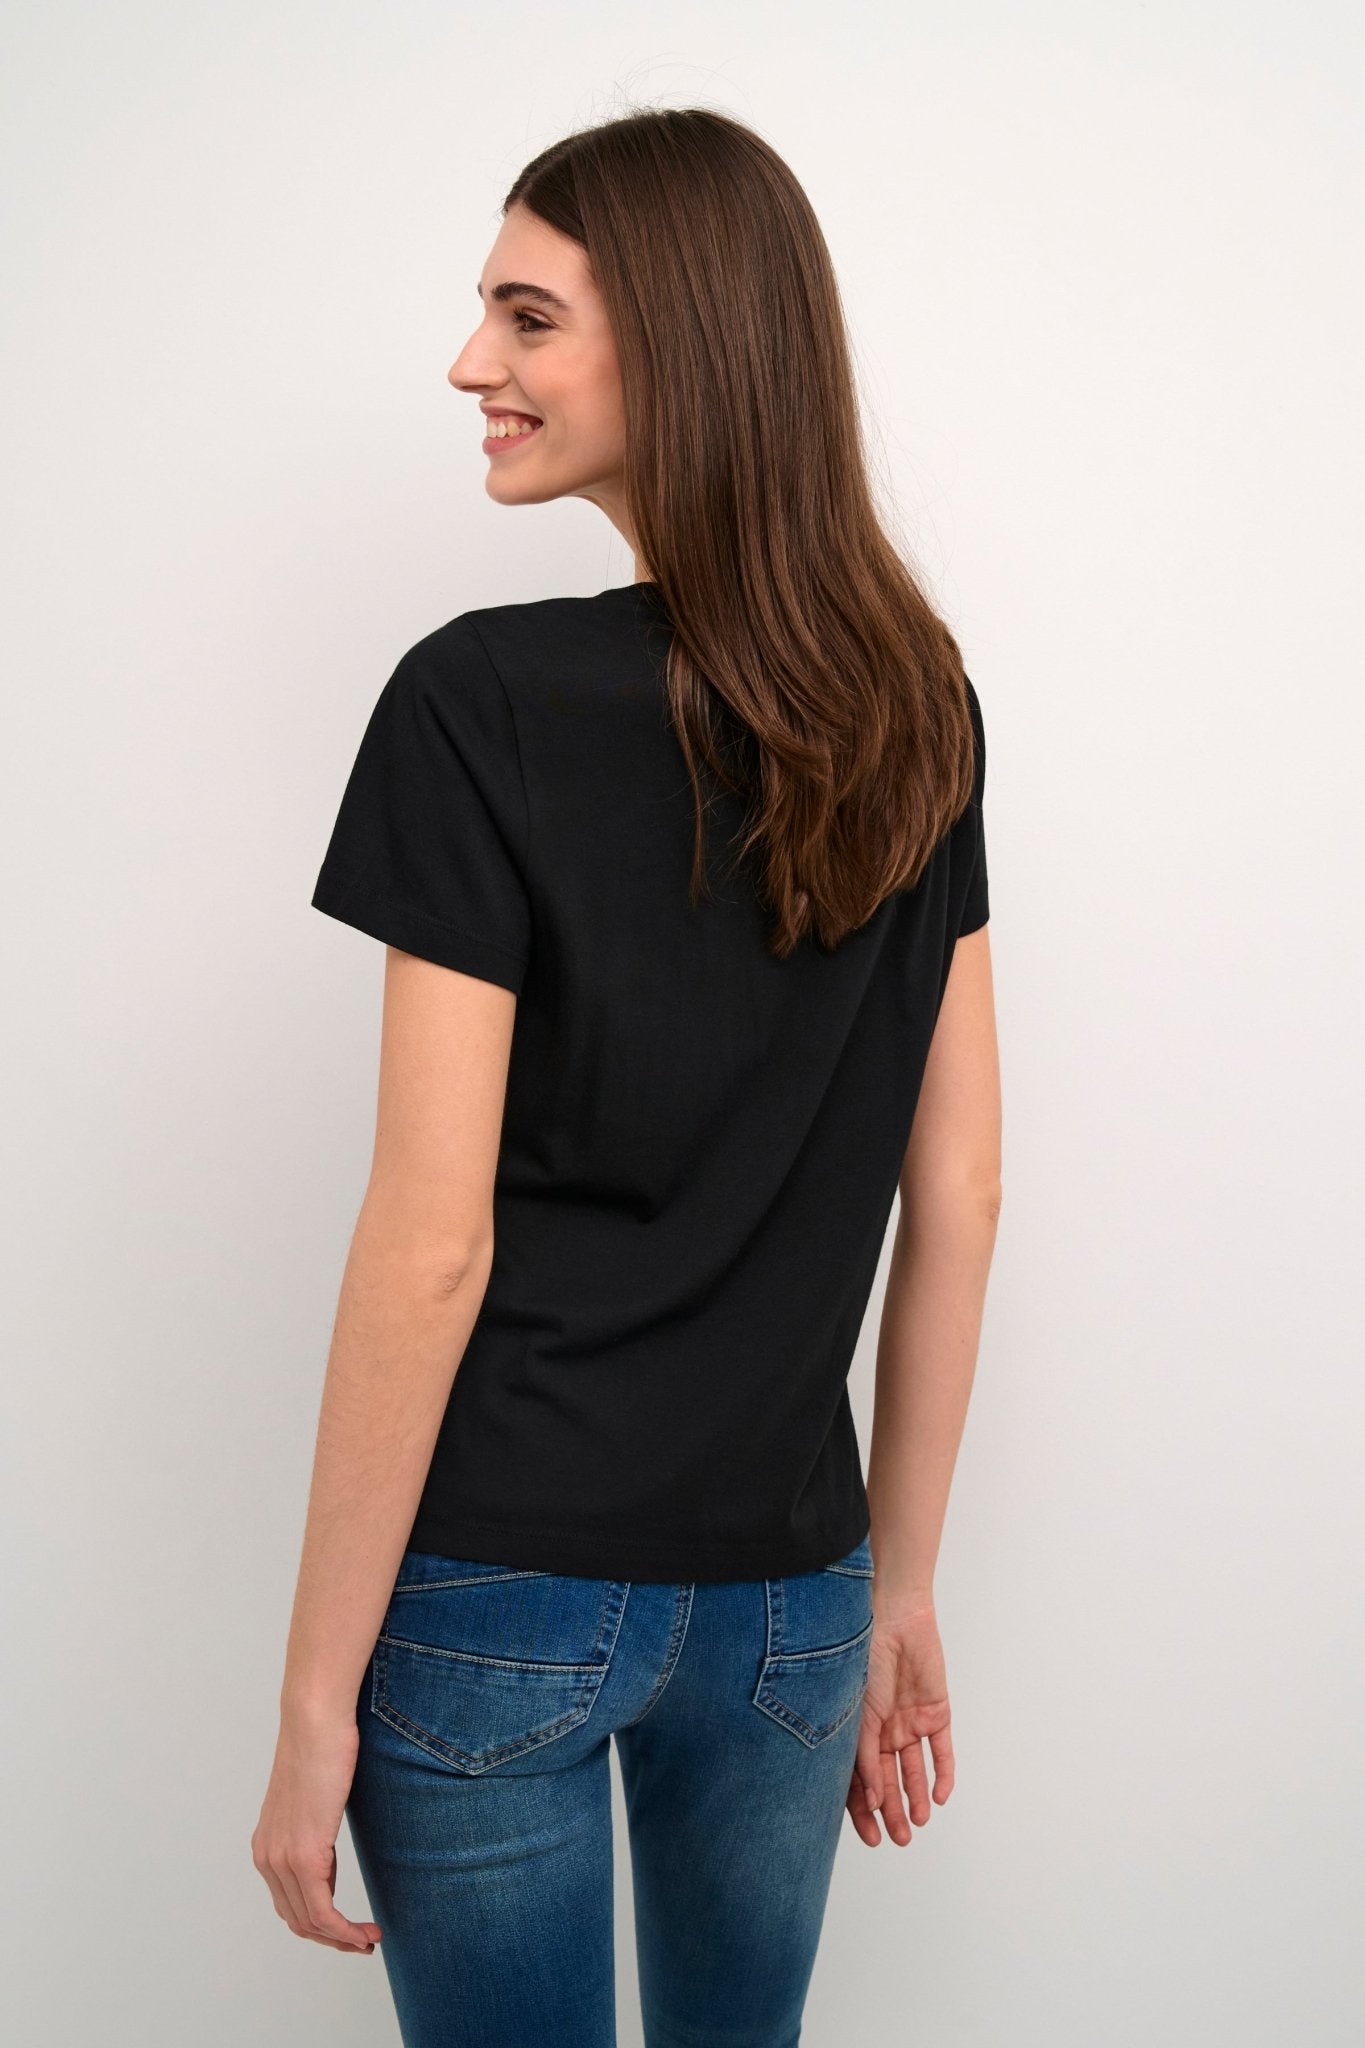 Naia T-shirt by Cream - black - Blue Sky Fashions & Lingerie